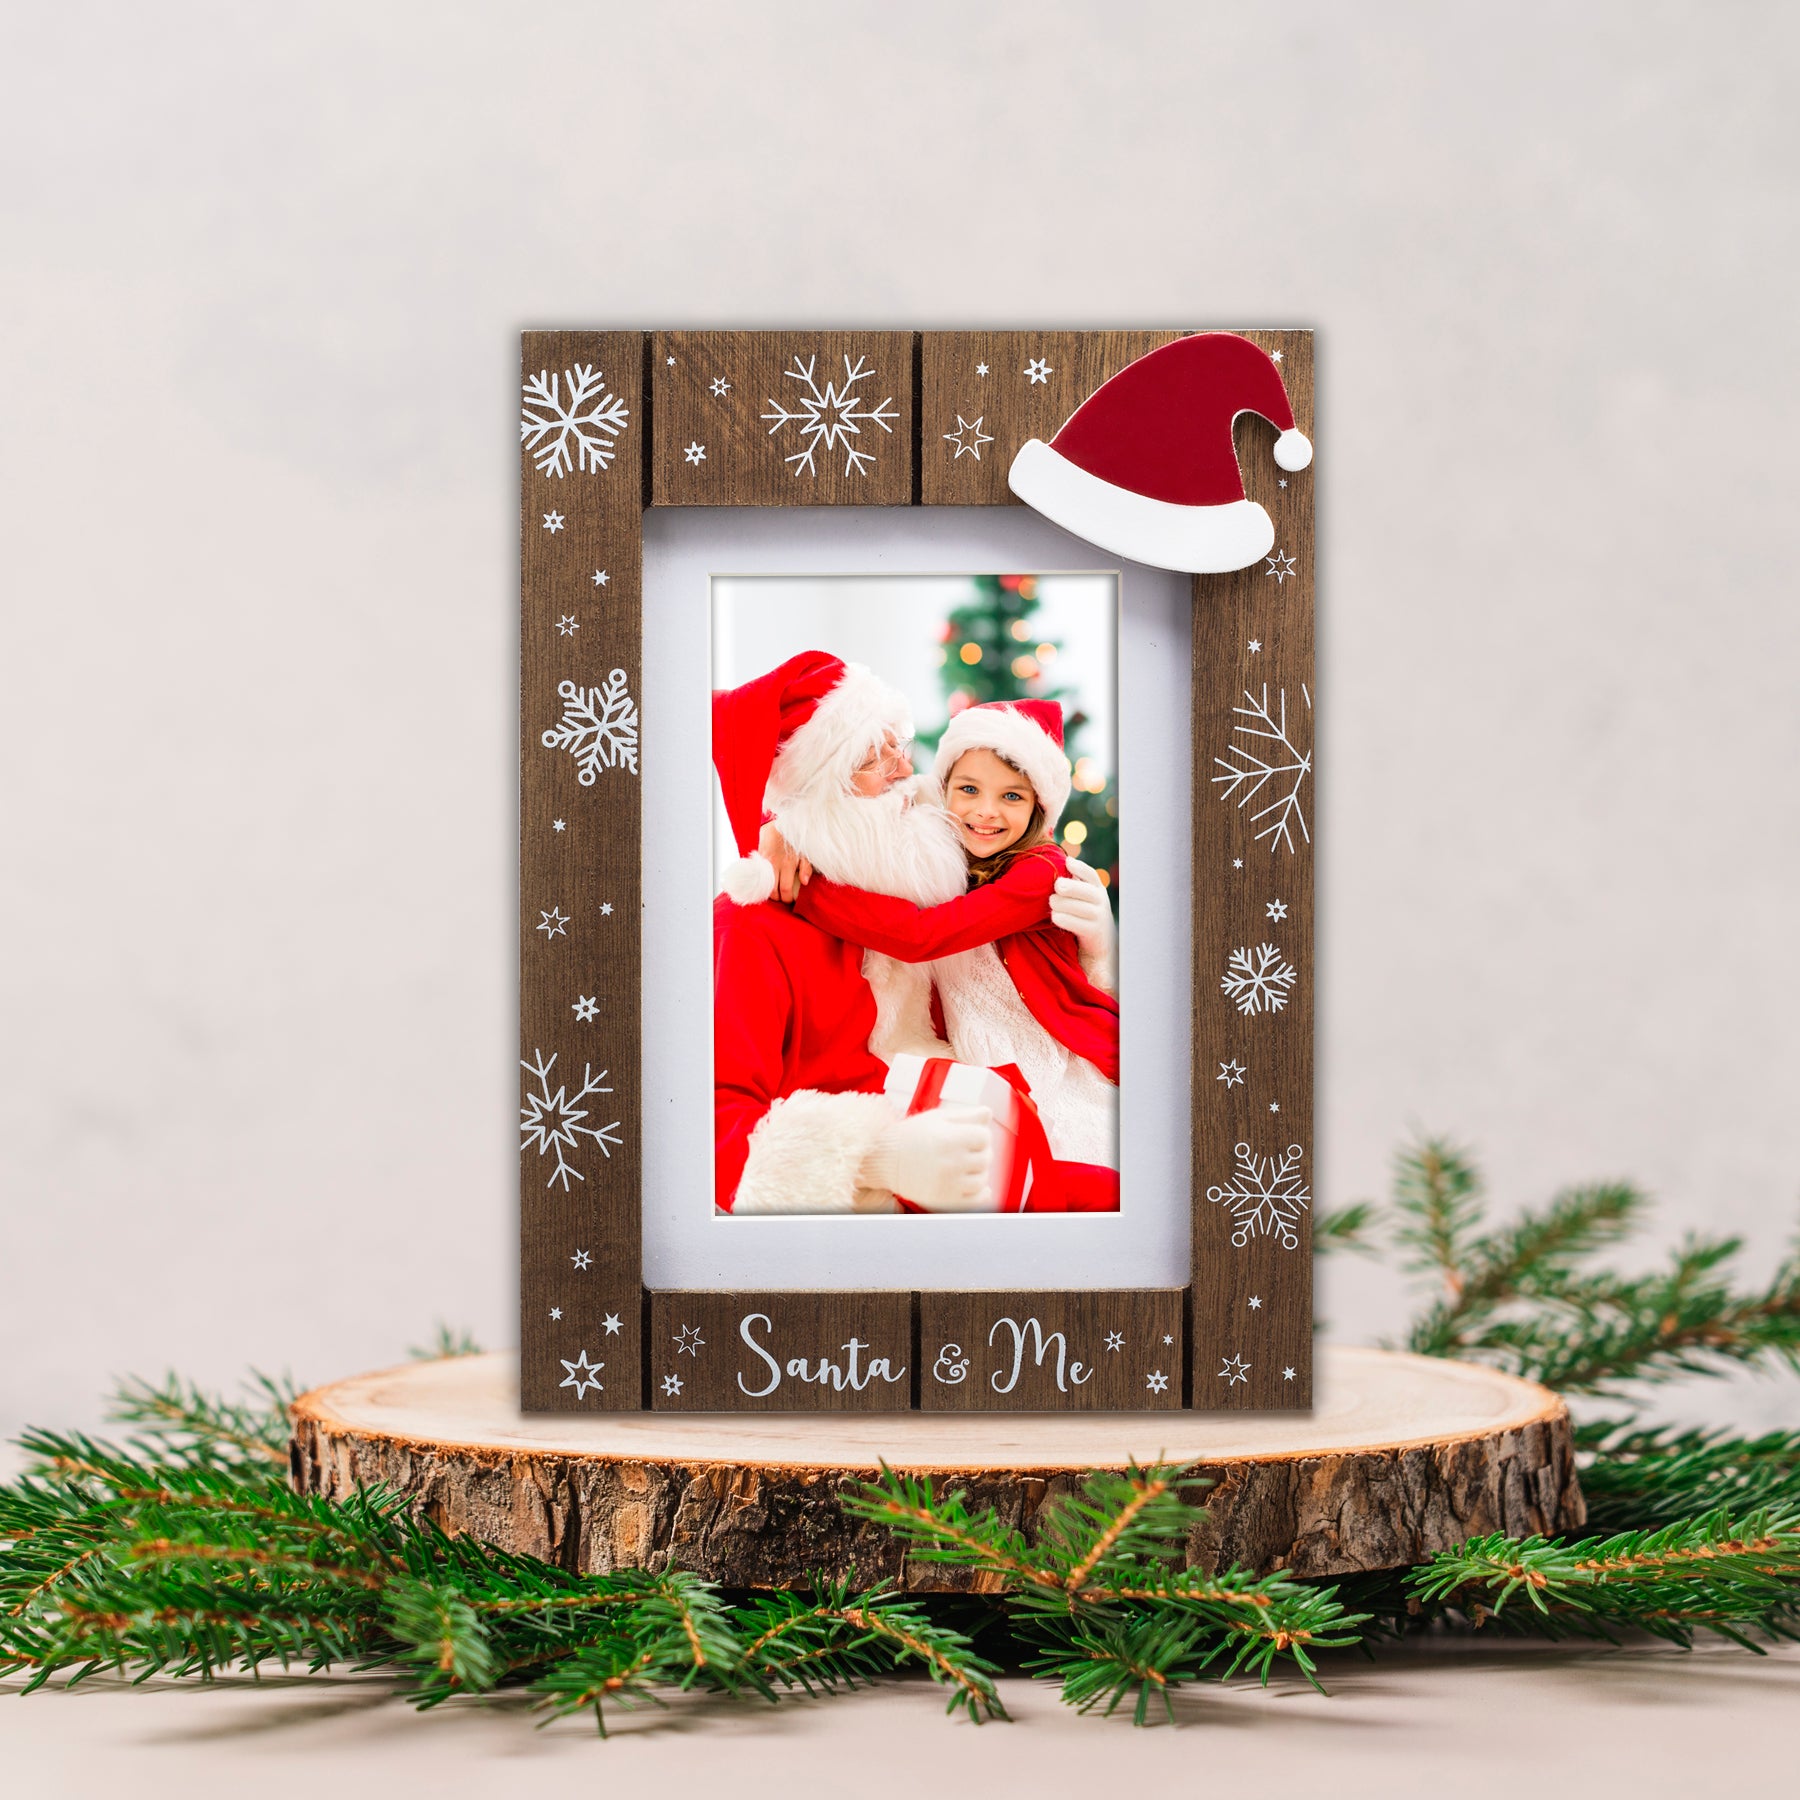 Santa & Me Wood Picture Frames